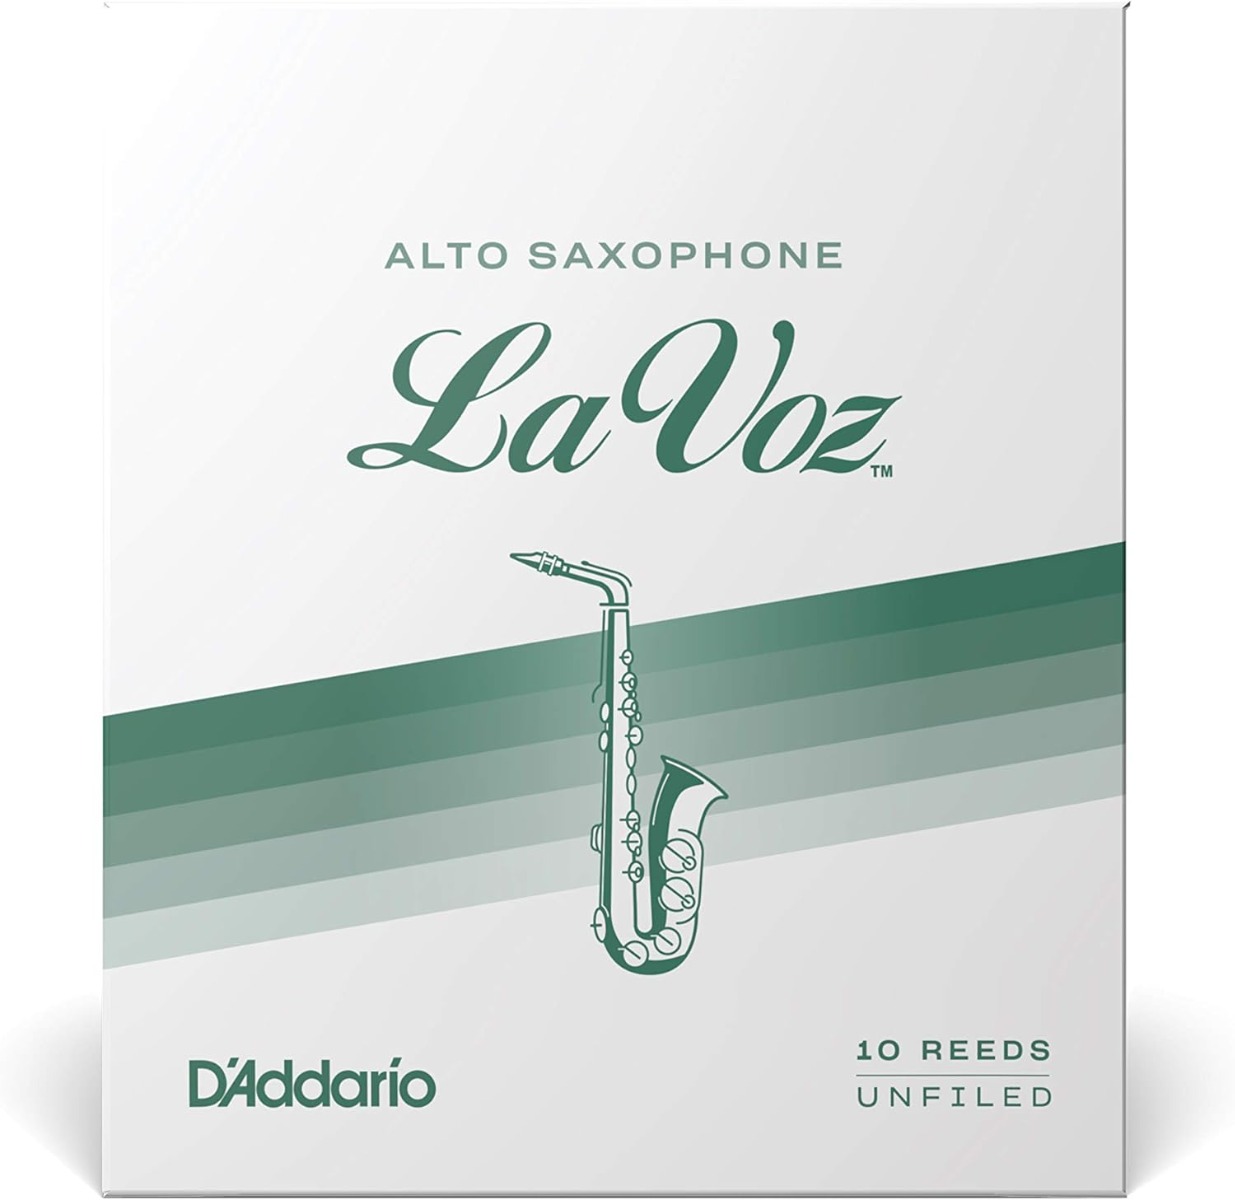 La Voz Blätter - Altsaxophon